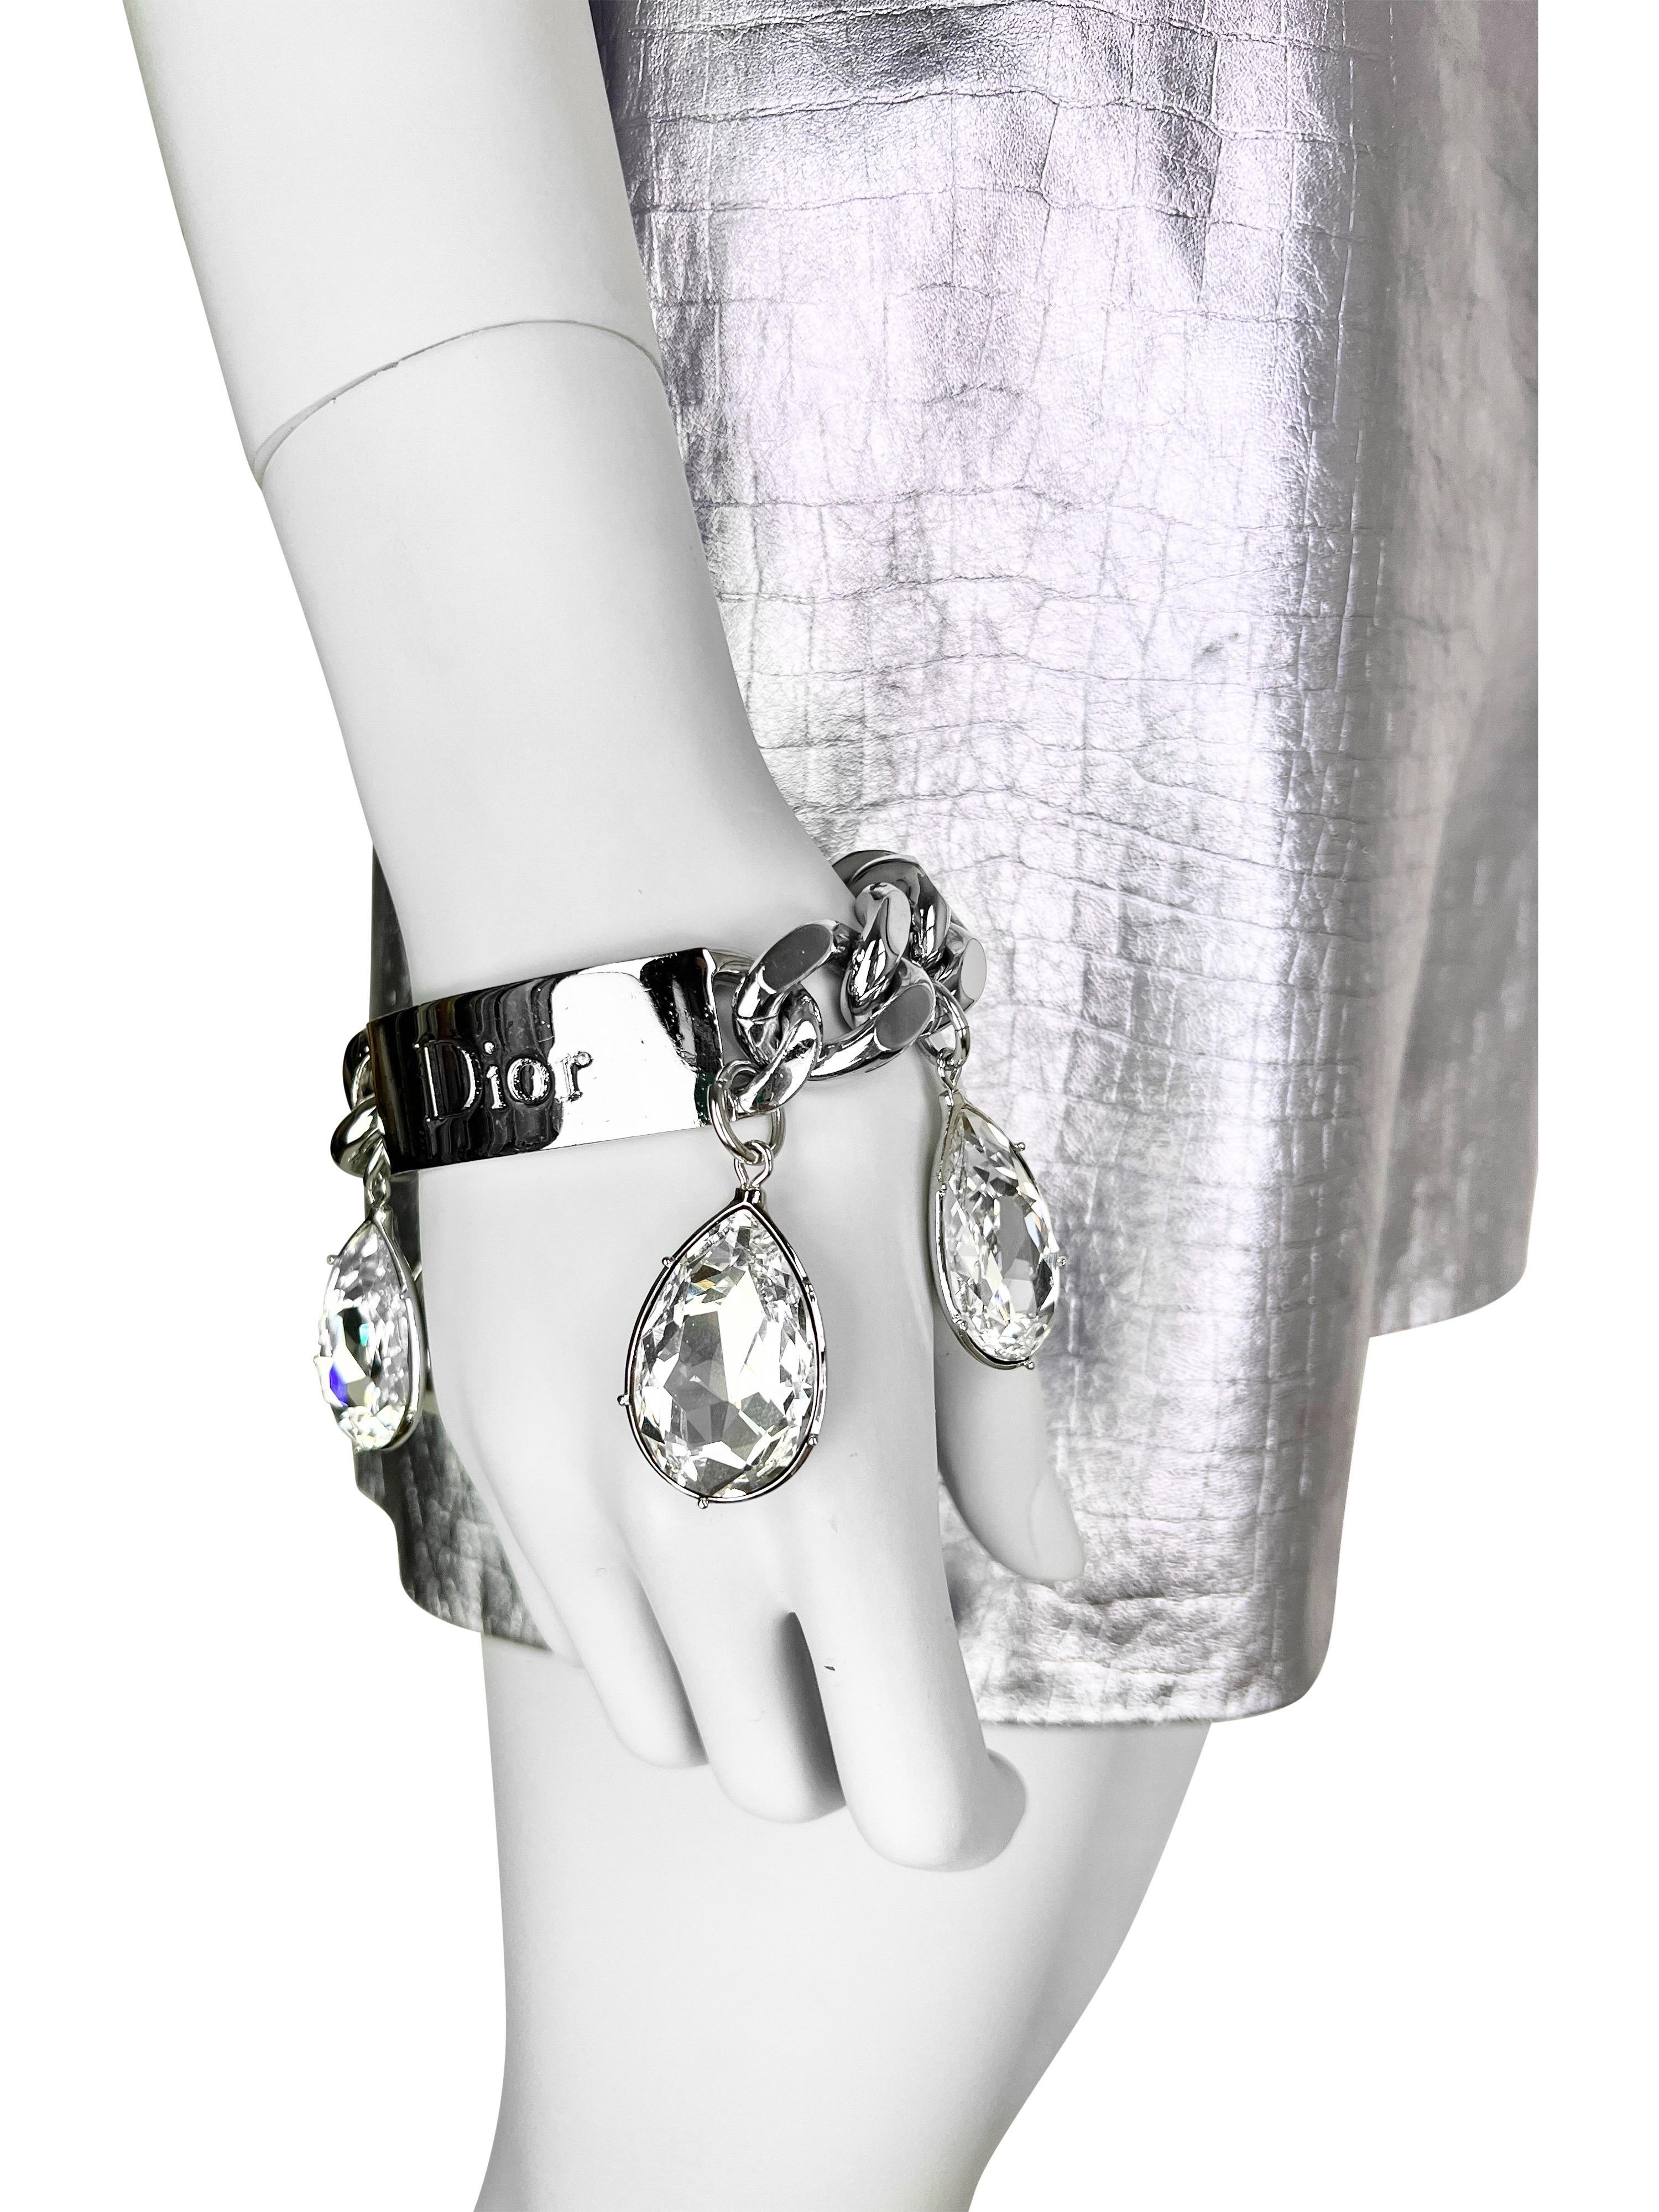 Dior by John Galliano Fall 2004 Swarovski Crystal Runway Bracelet In Good Condition For Sale In Prague, CZ